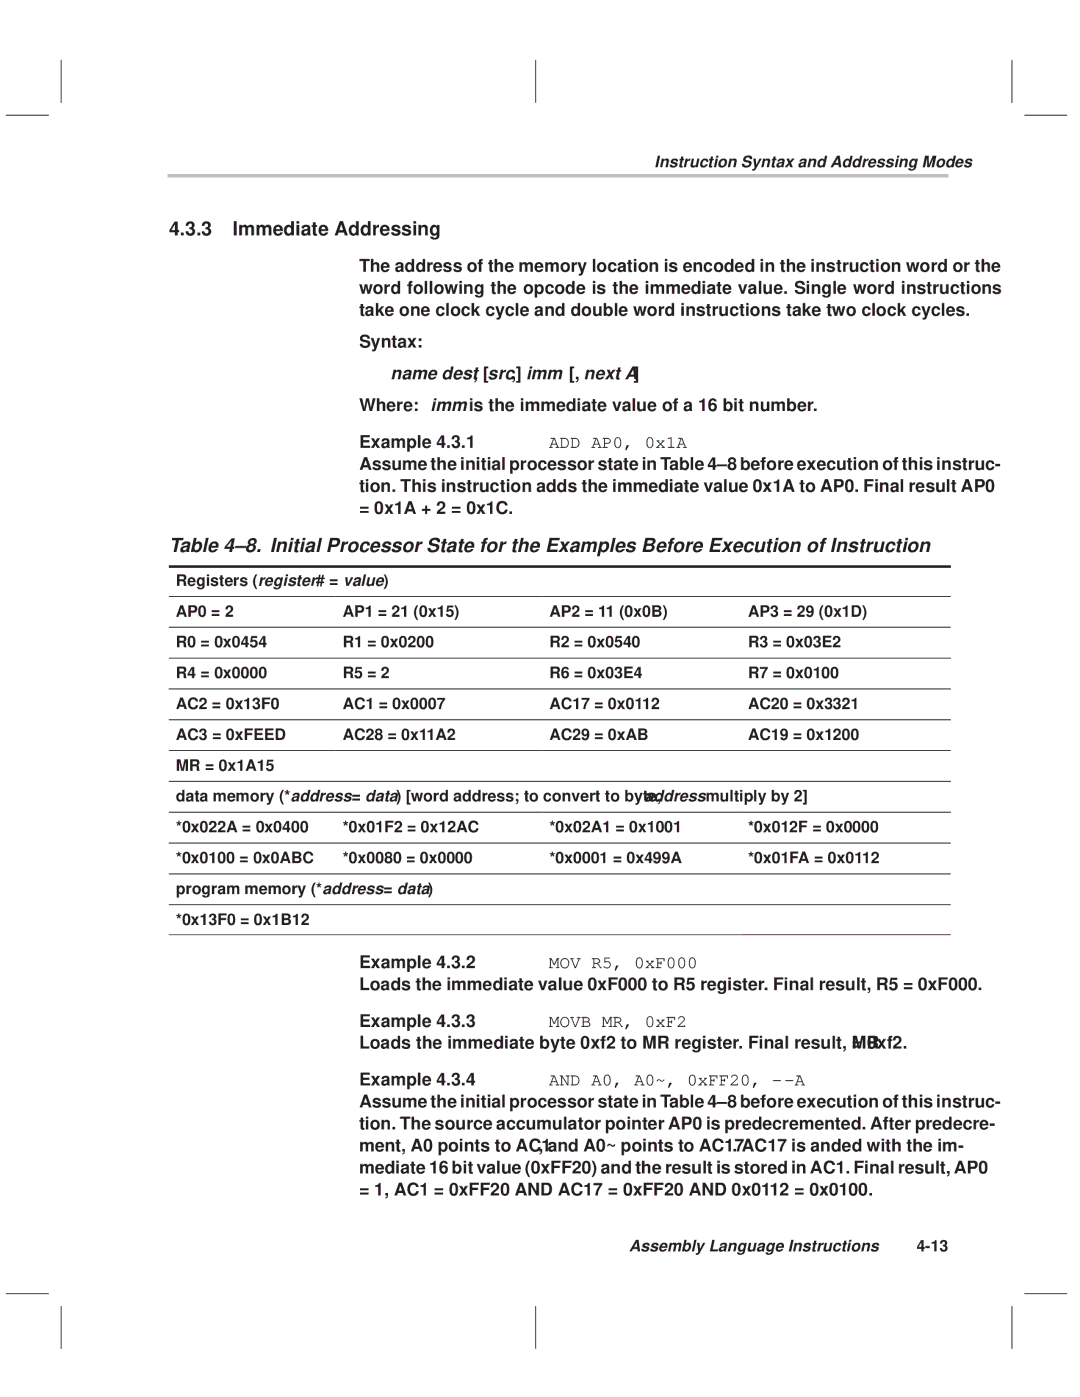 Texas Instruments MSP50C614 manual Immediate Addressing, Syntax, Example 